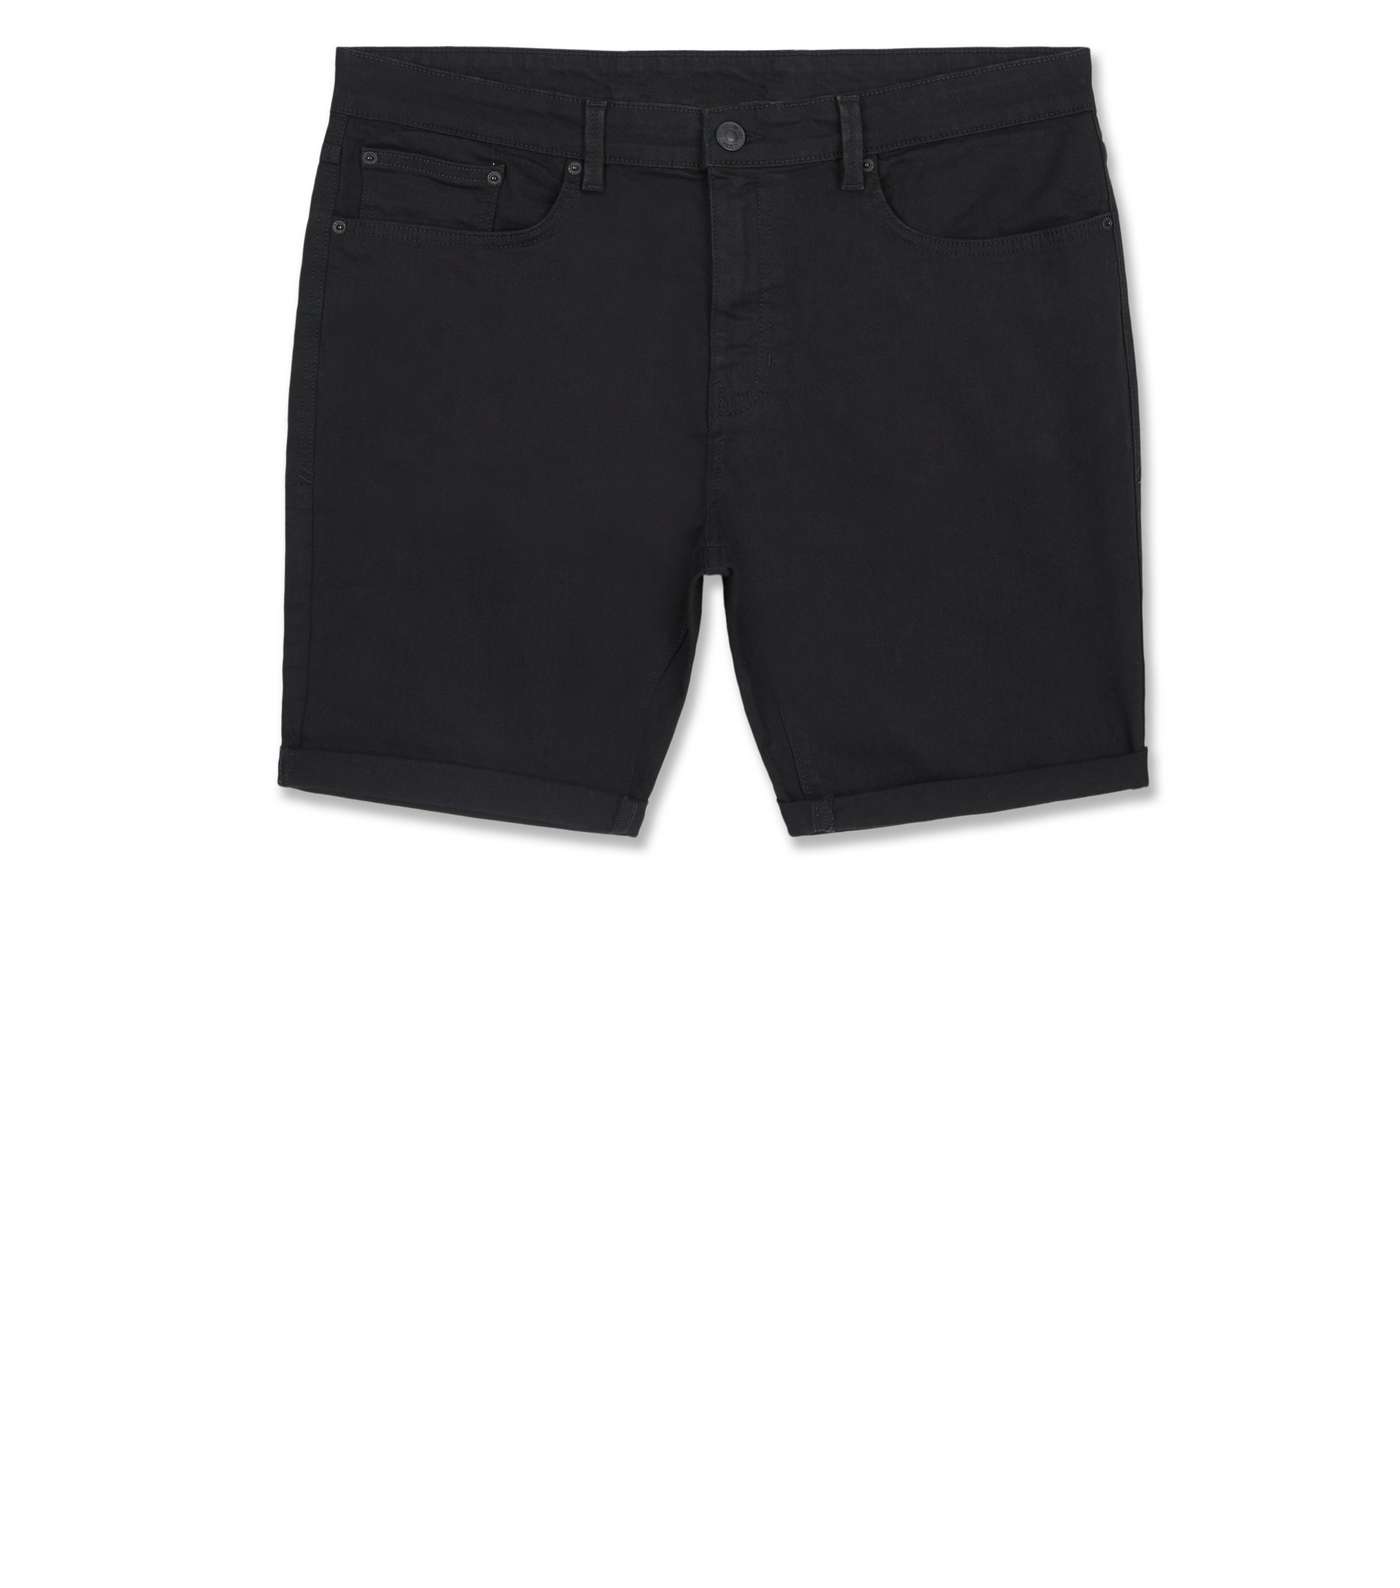 Plus Size Black Denim Shorts 